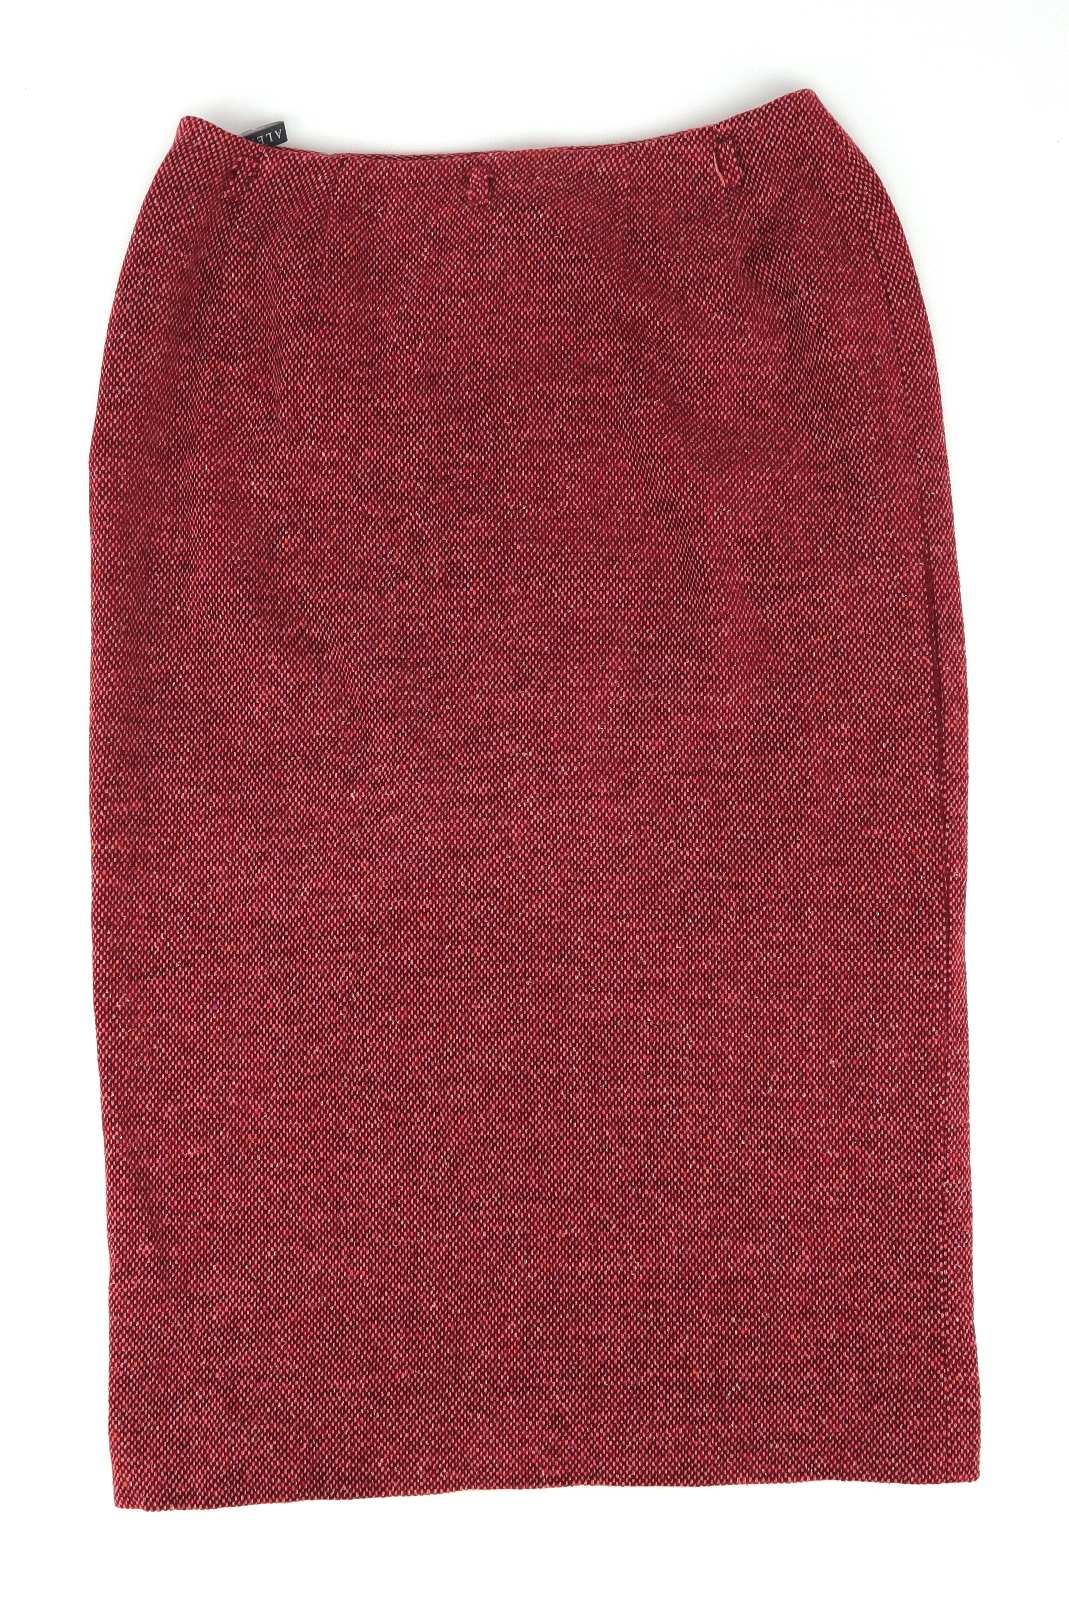 Alex & Co Womens Size 14 Red Textured Split Front Skirt (Regular)